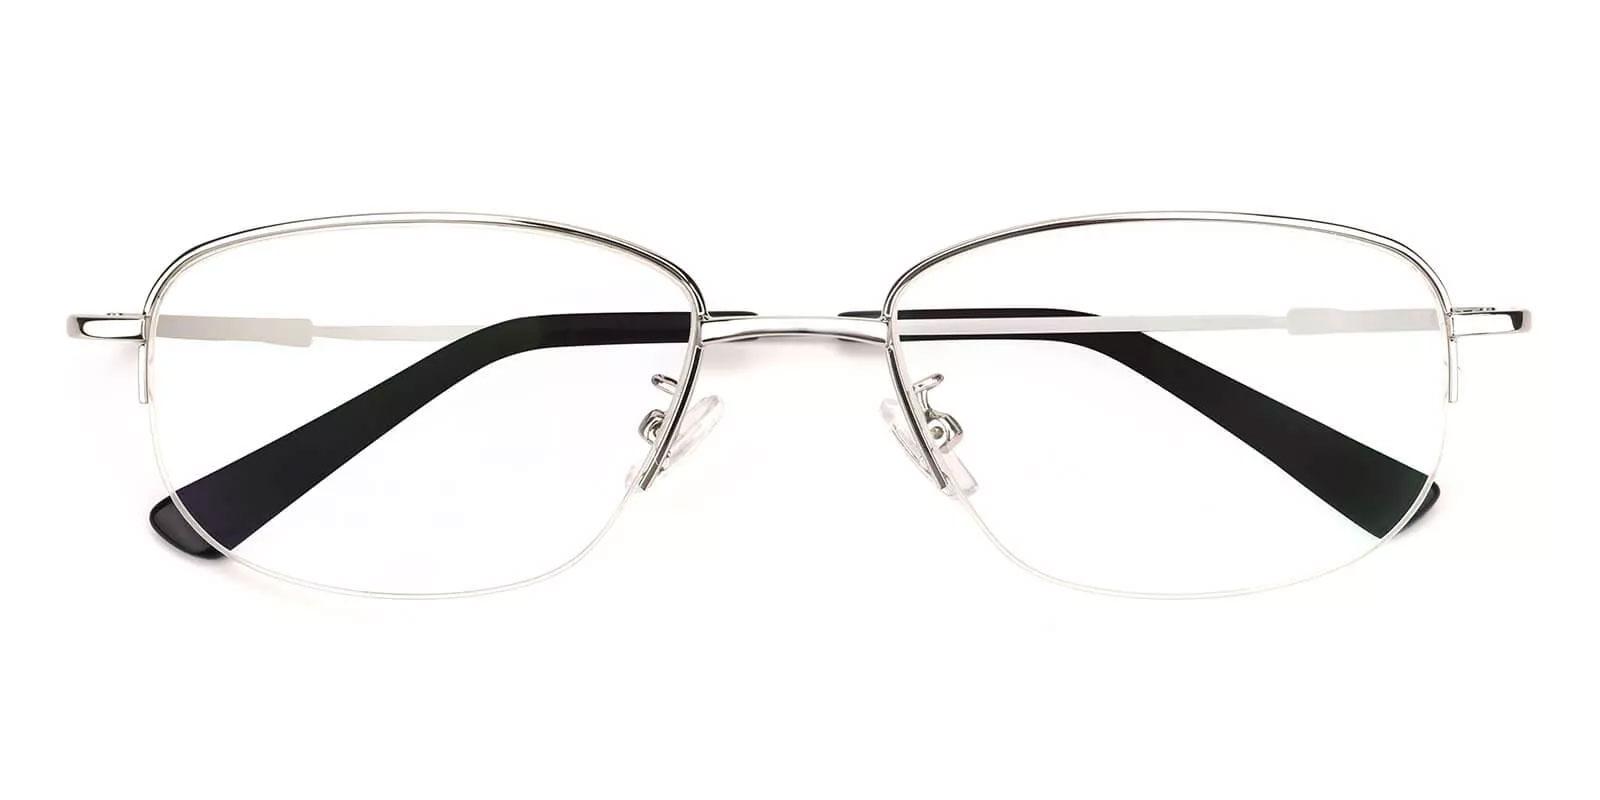 Joshua Silver Metal Eyeglasses , NosePads Frames from ABBE Glasses